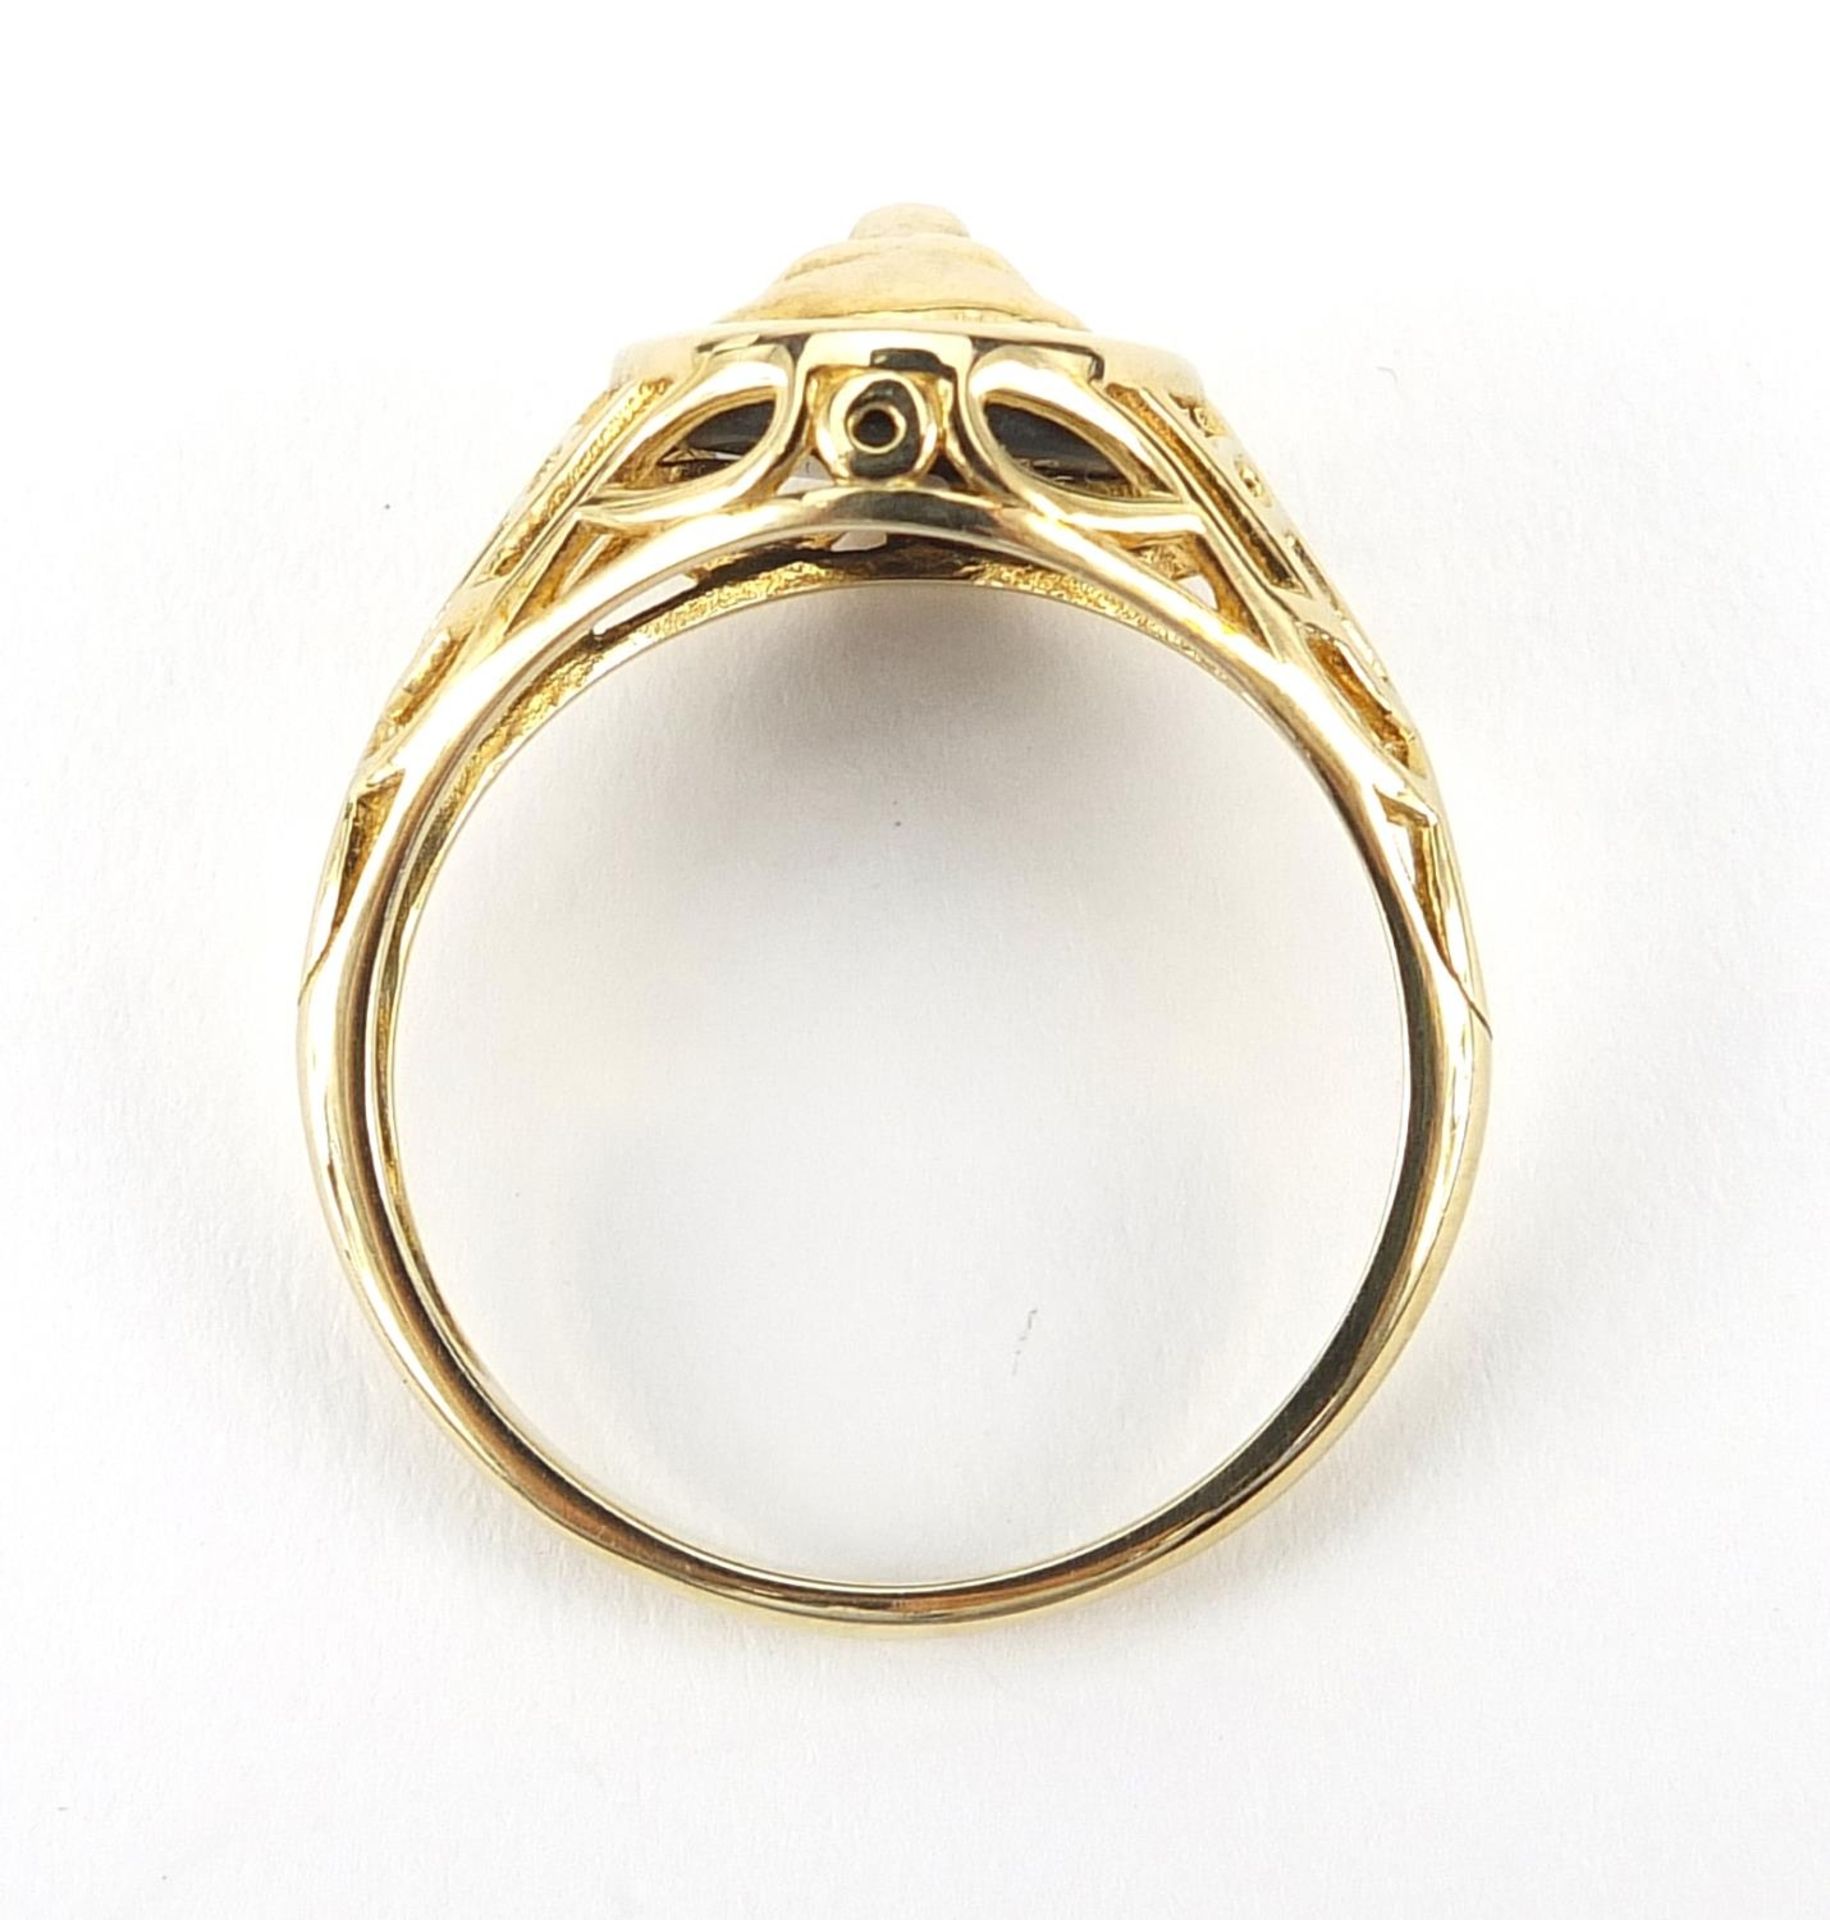 9ct gold and black onyx Jaguar car mascot ring, size V, 4.3g - Image 4 of 5